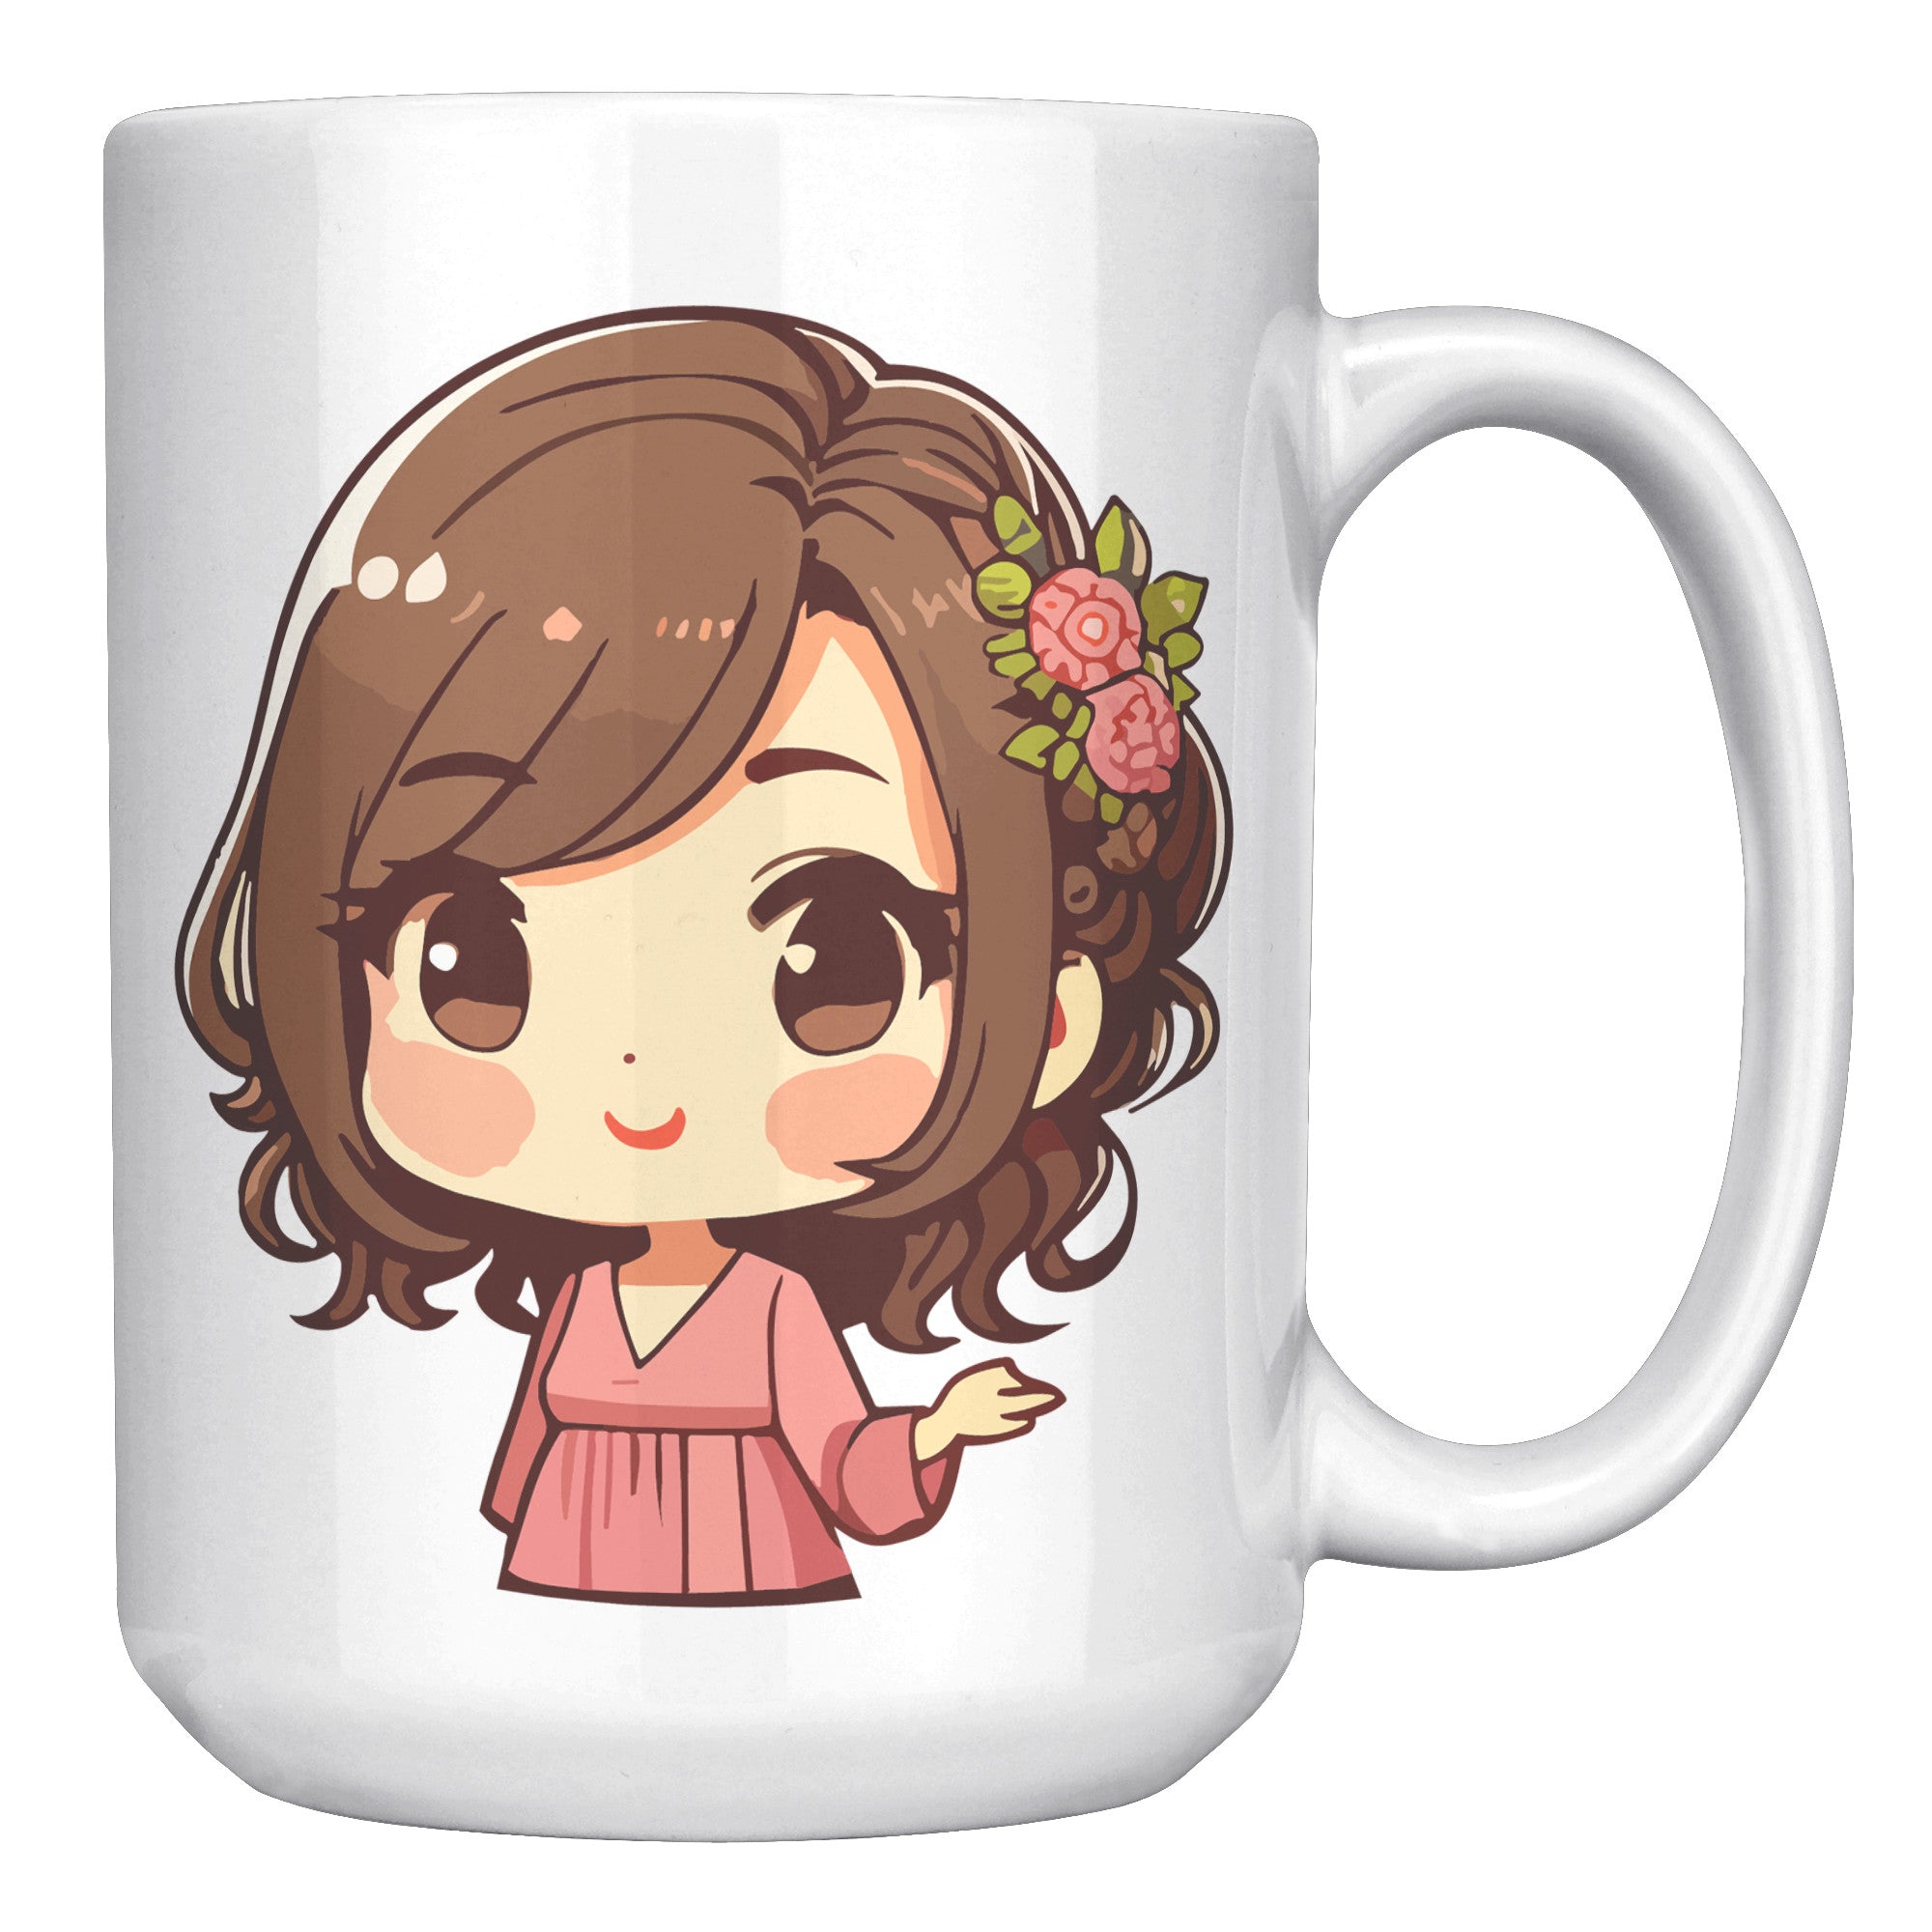 "Marites Gossip Queen Coffee Mug - Cute Cartoon 'Ano Ang Latest?' Cup - Perfect Chismosa Gift - Filipino Slang Tea Mug" - EE1